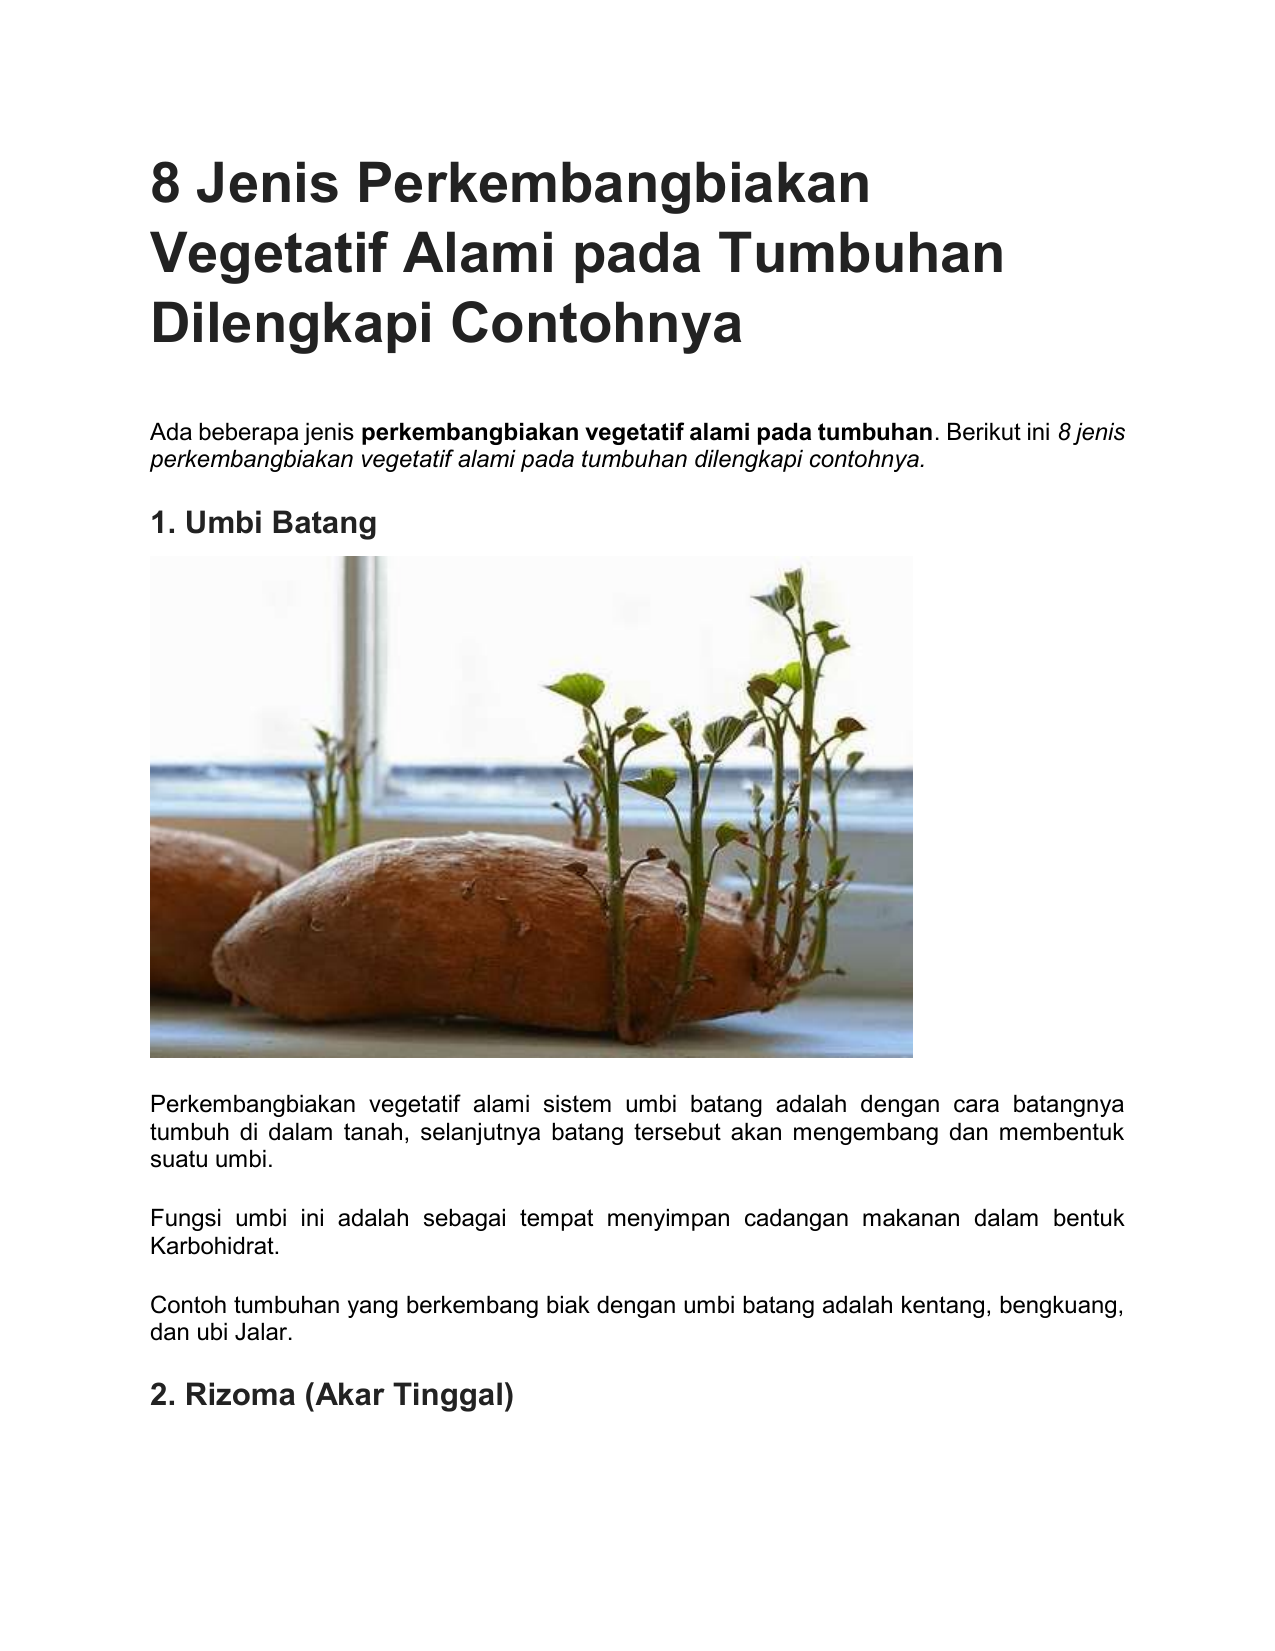 8 Jenis Perkembangbiakan Vegetatif Alami Pada Tumbuhan Dilengkapi Contohnya